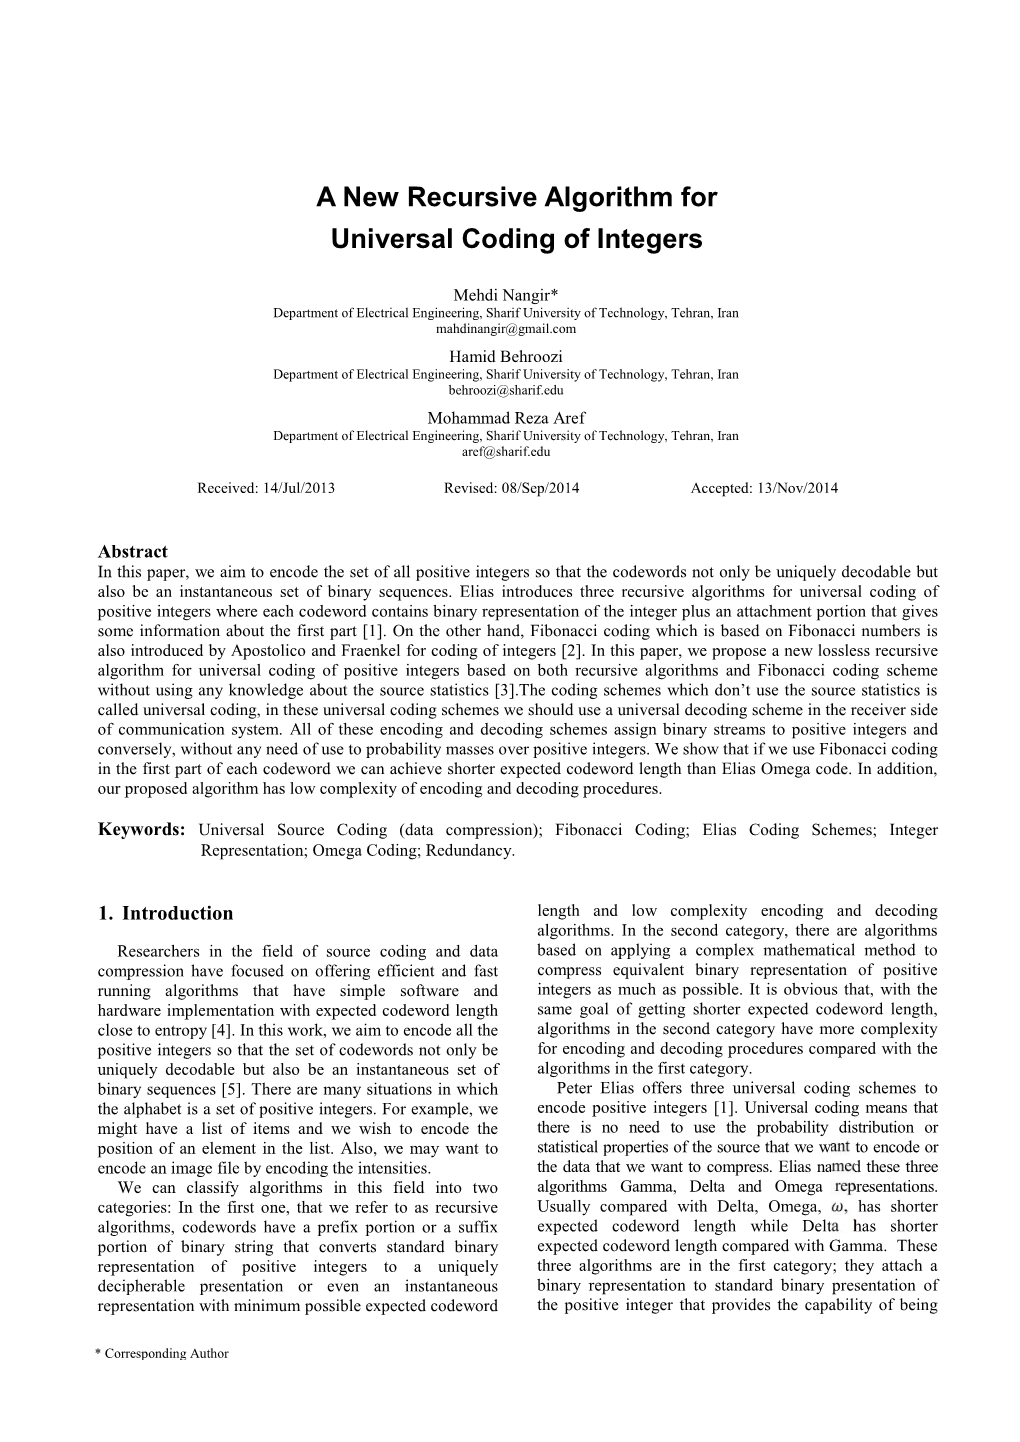 A New Recursive Algorithm for Universal Coding of Integers